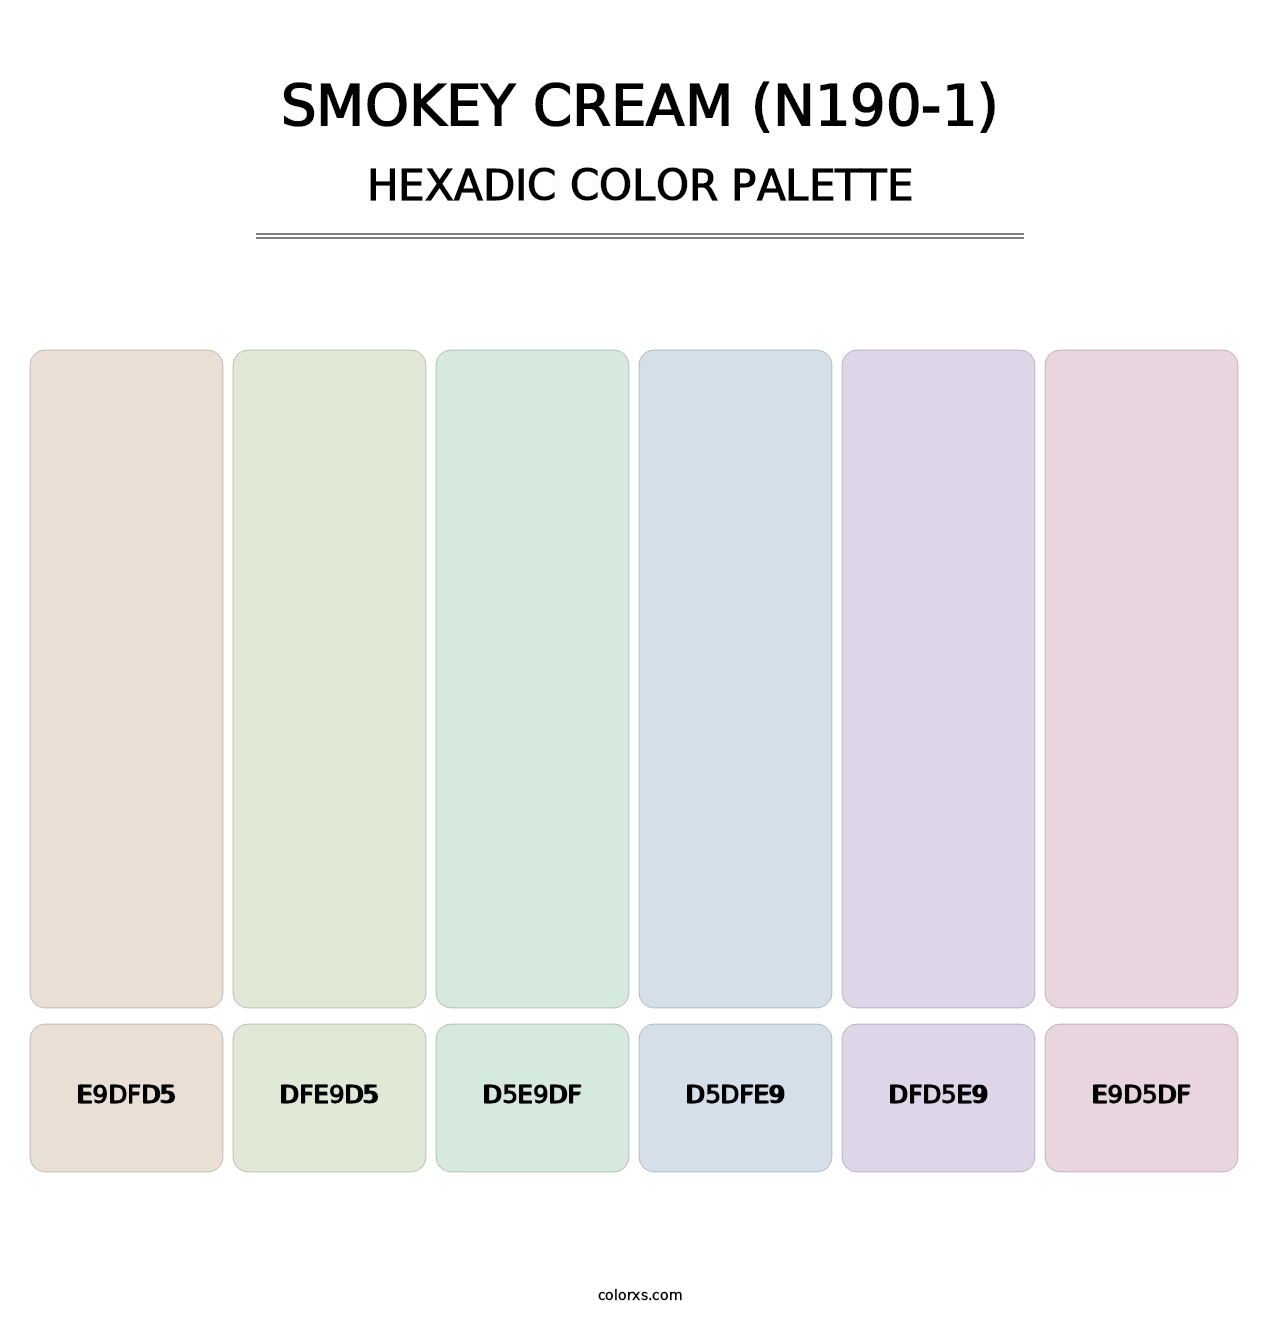 Smokey Cream (N190-1) - Hexadic Color Palette